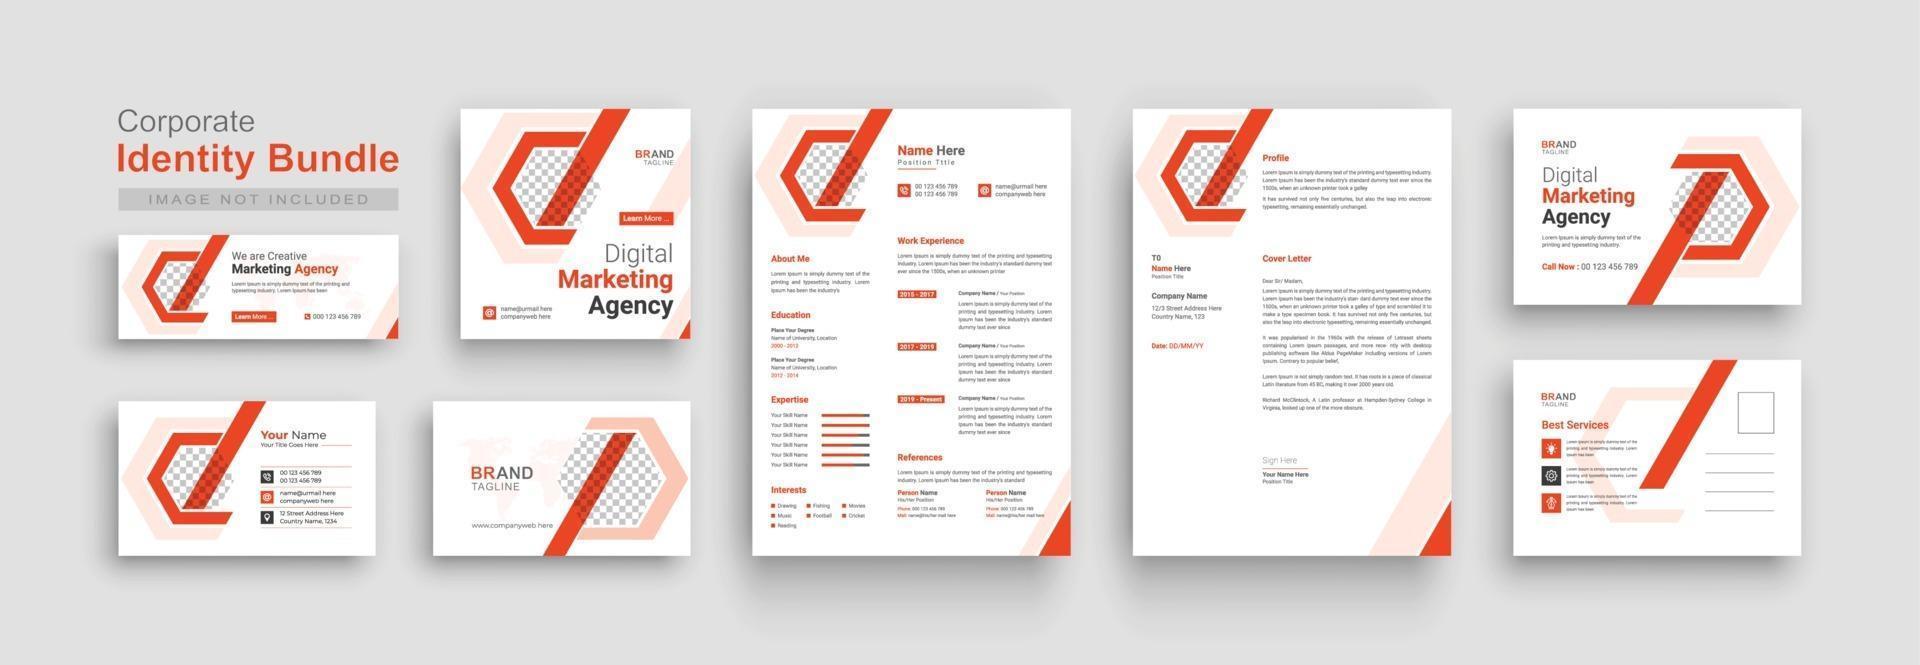 Corporate Branding Identity Briefpapier, Geschäftsbriefpapierkollektion vektor